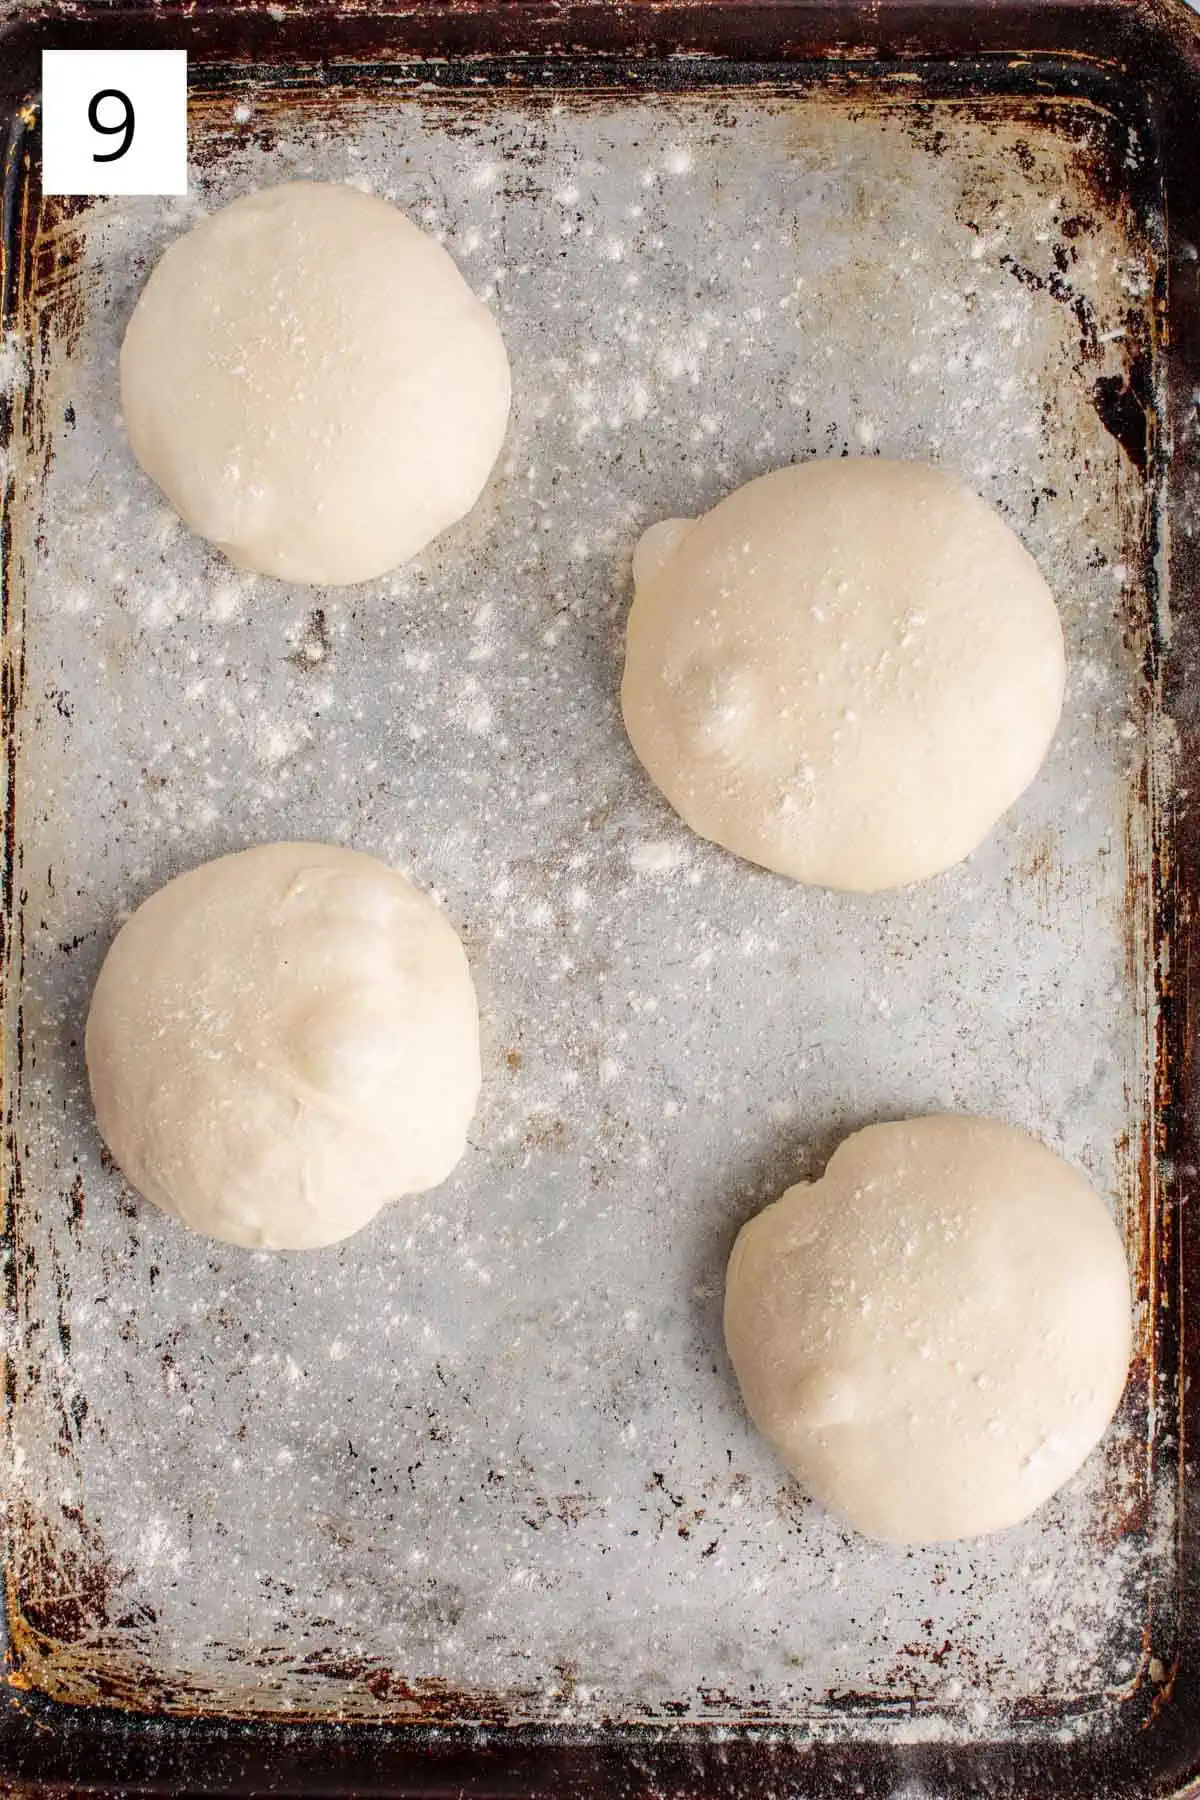 Small dough balls rising on a lined baking sheet.